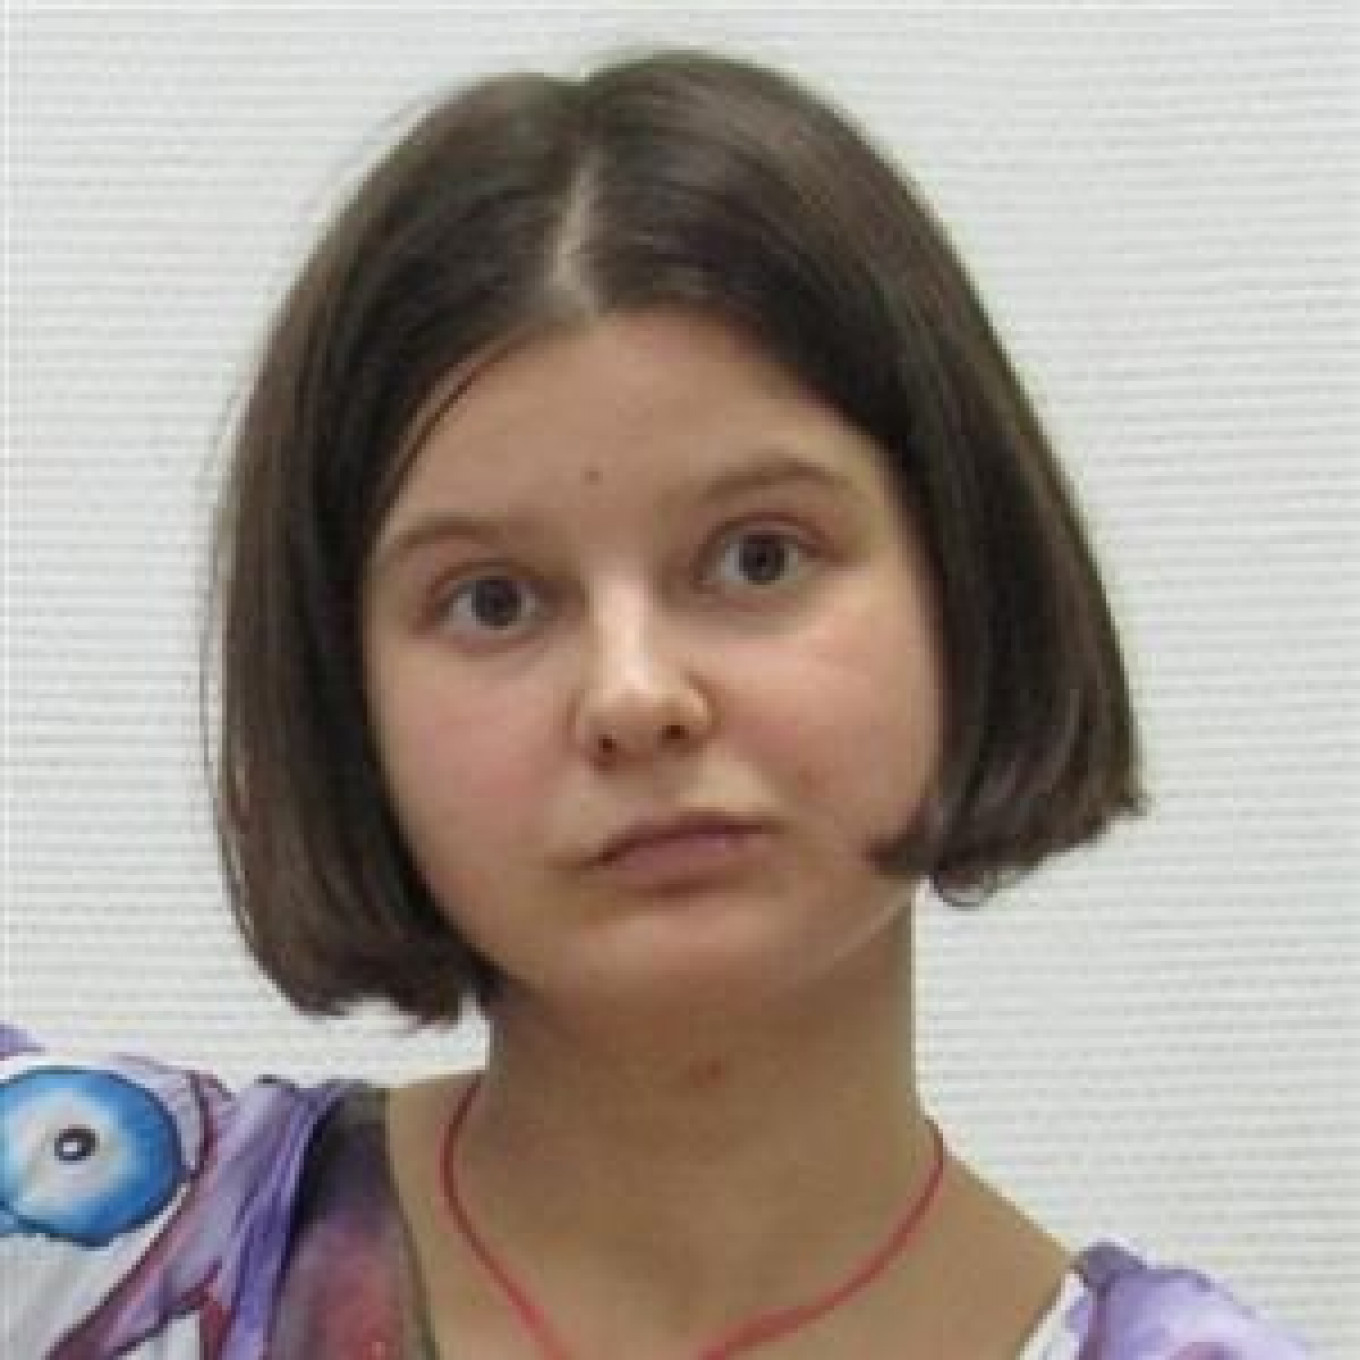  Yulia Tsvetkova. 